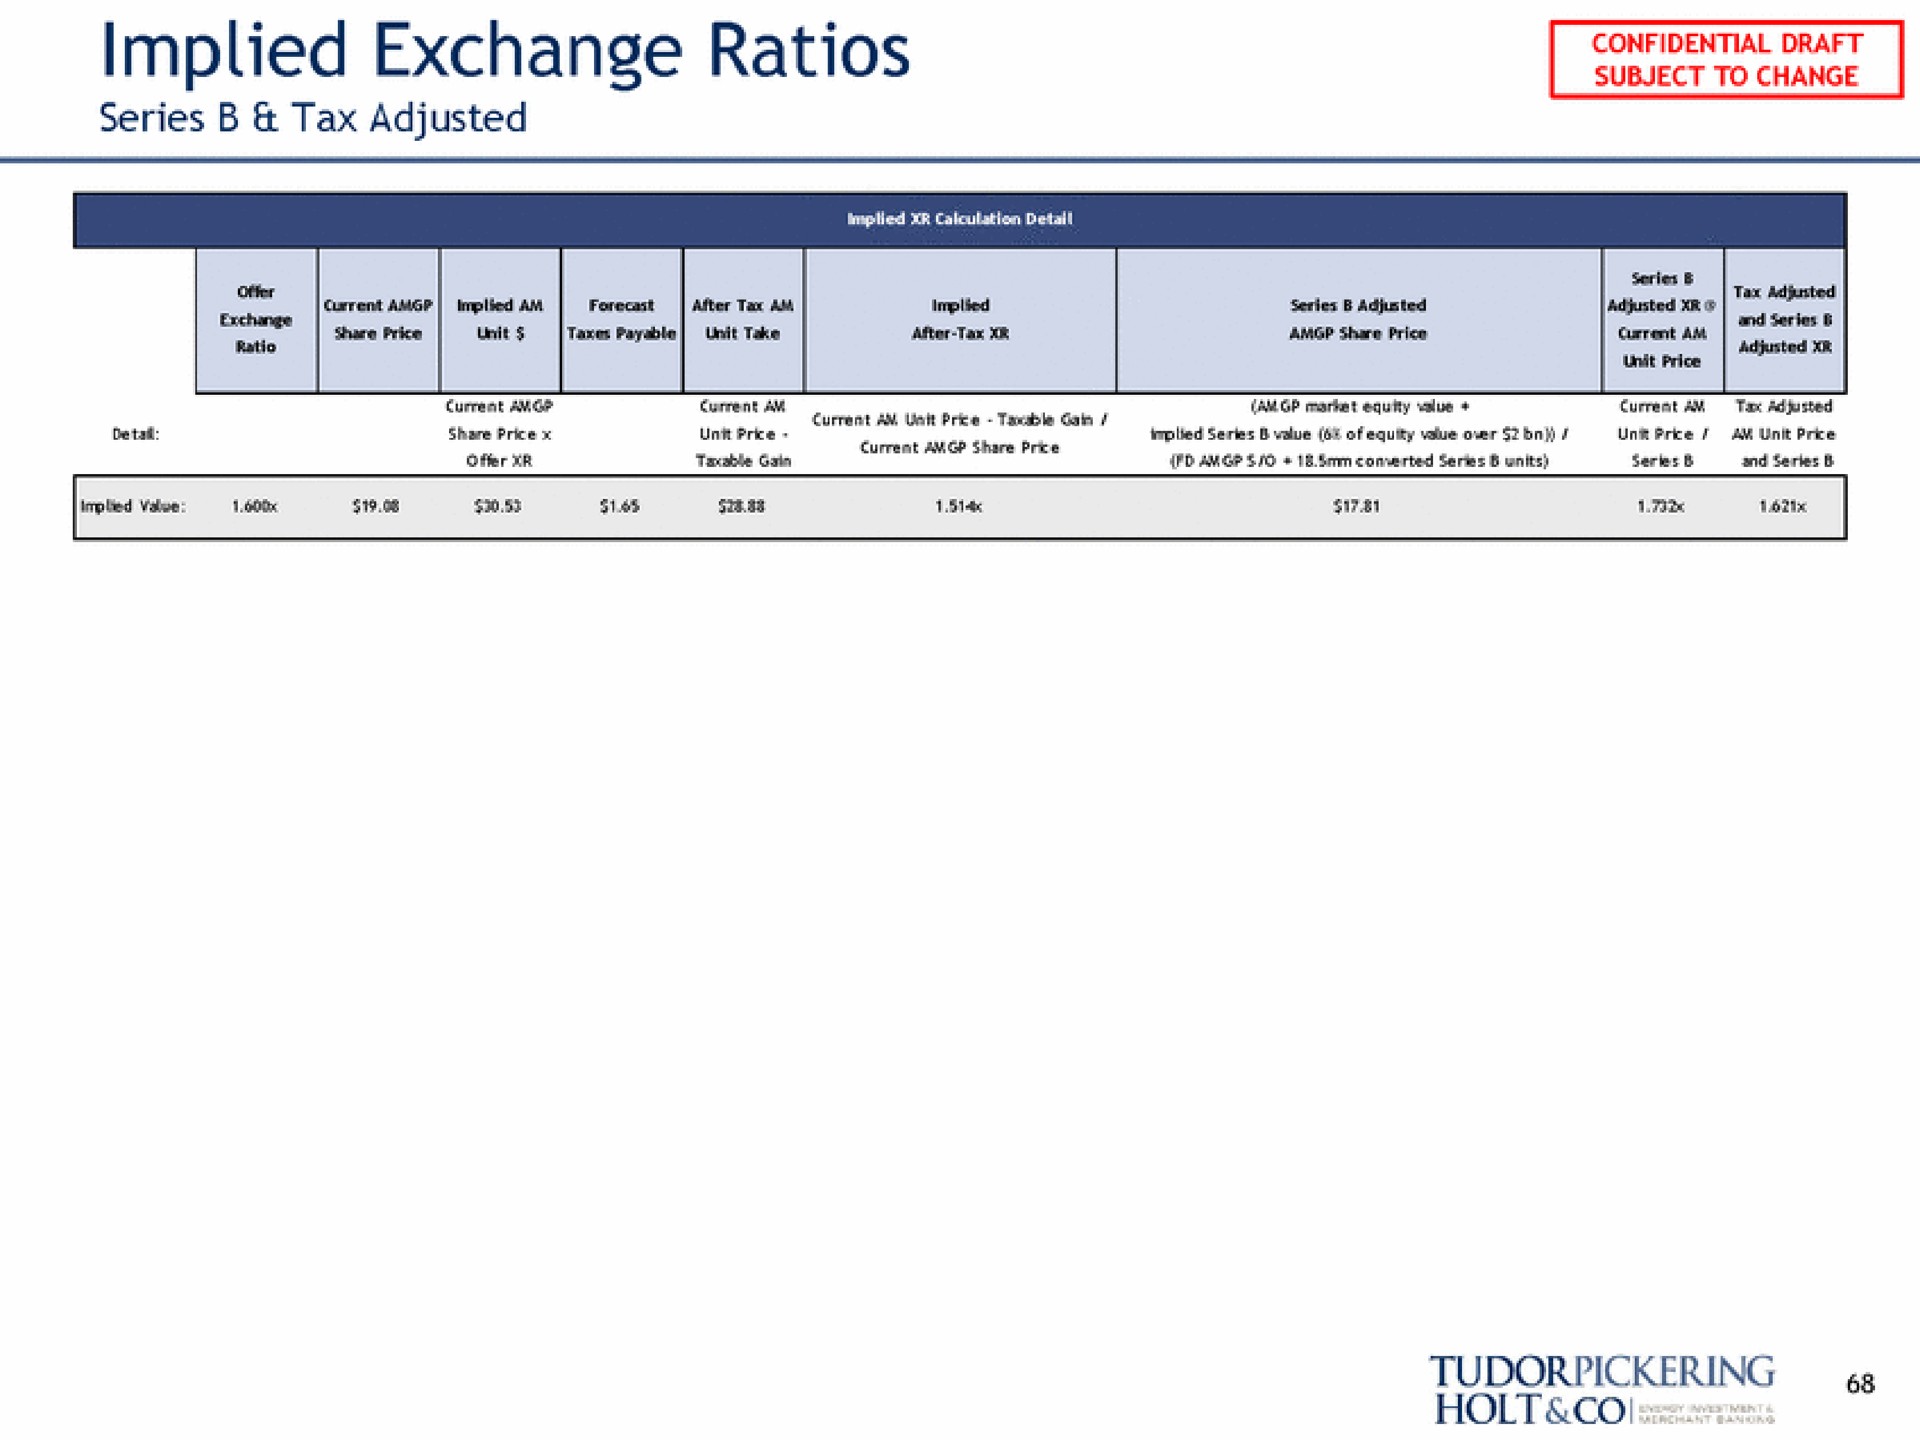 implied exchange ratios series tax adjusted holt | Tudor, Pickering, Holt & Co